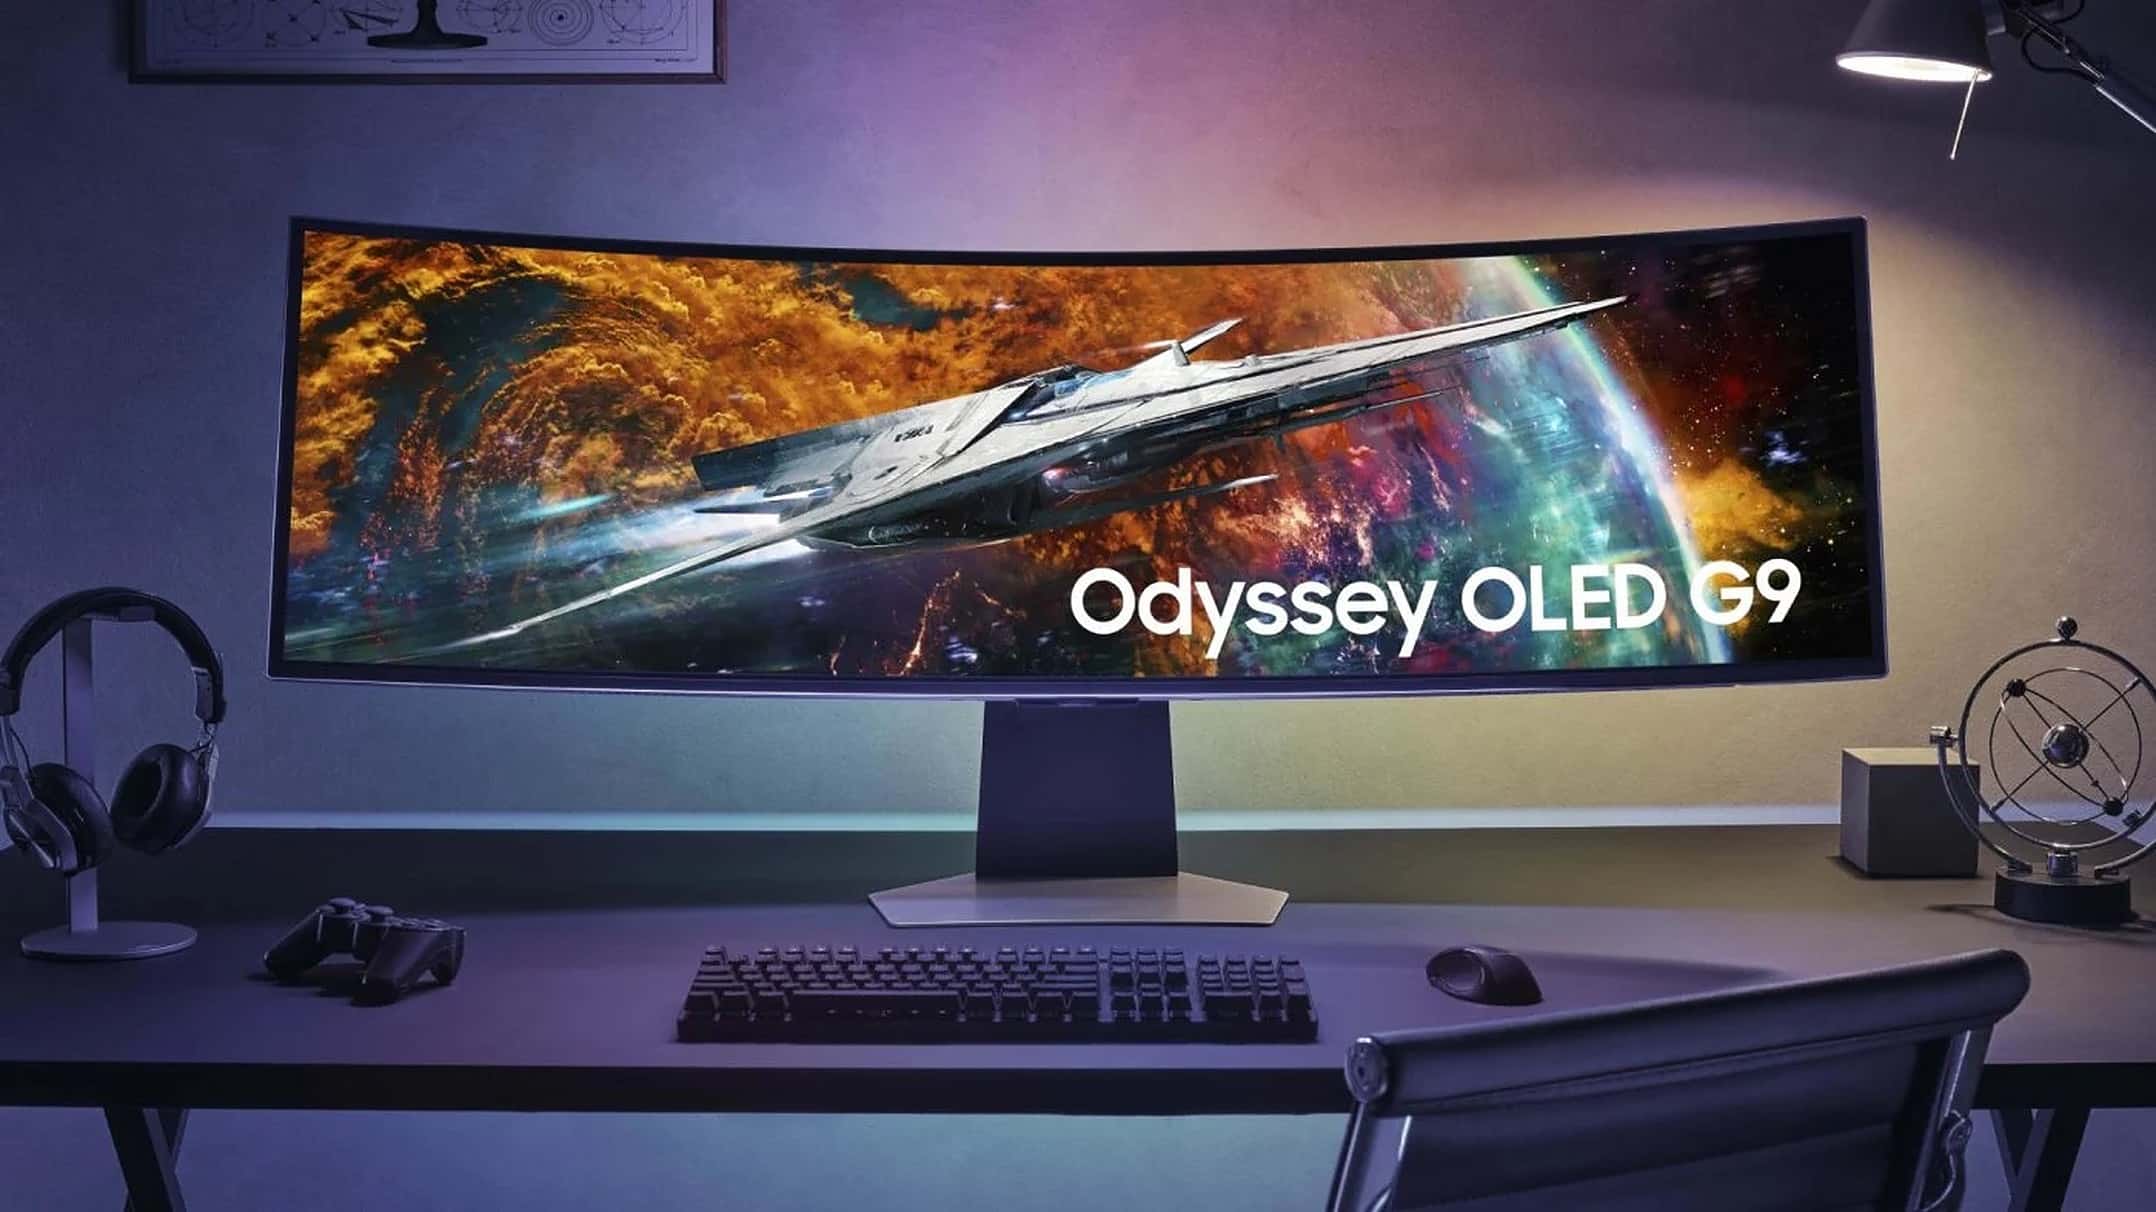 Samsung Odyssey OLED G9 monitor gaming ultrawide